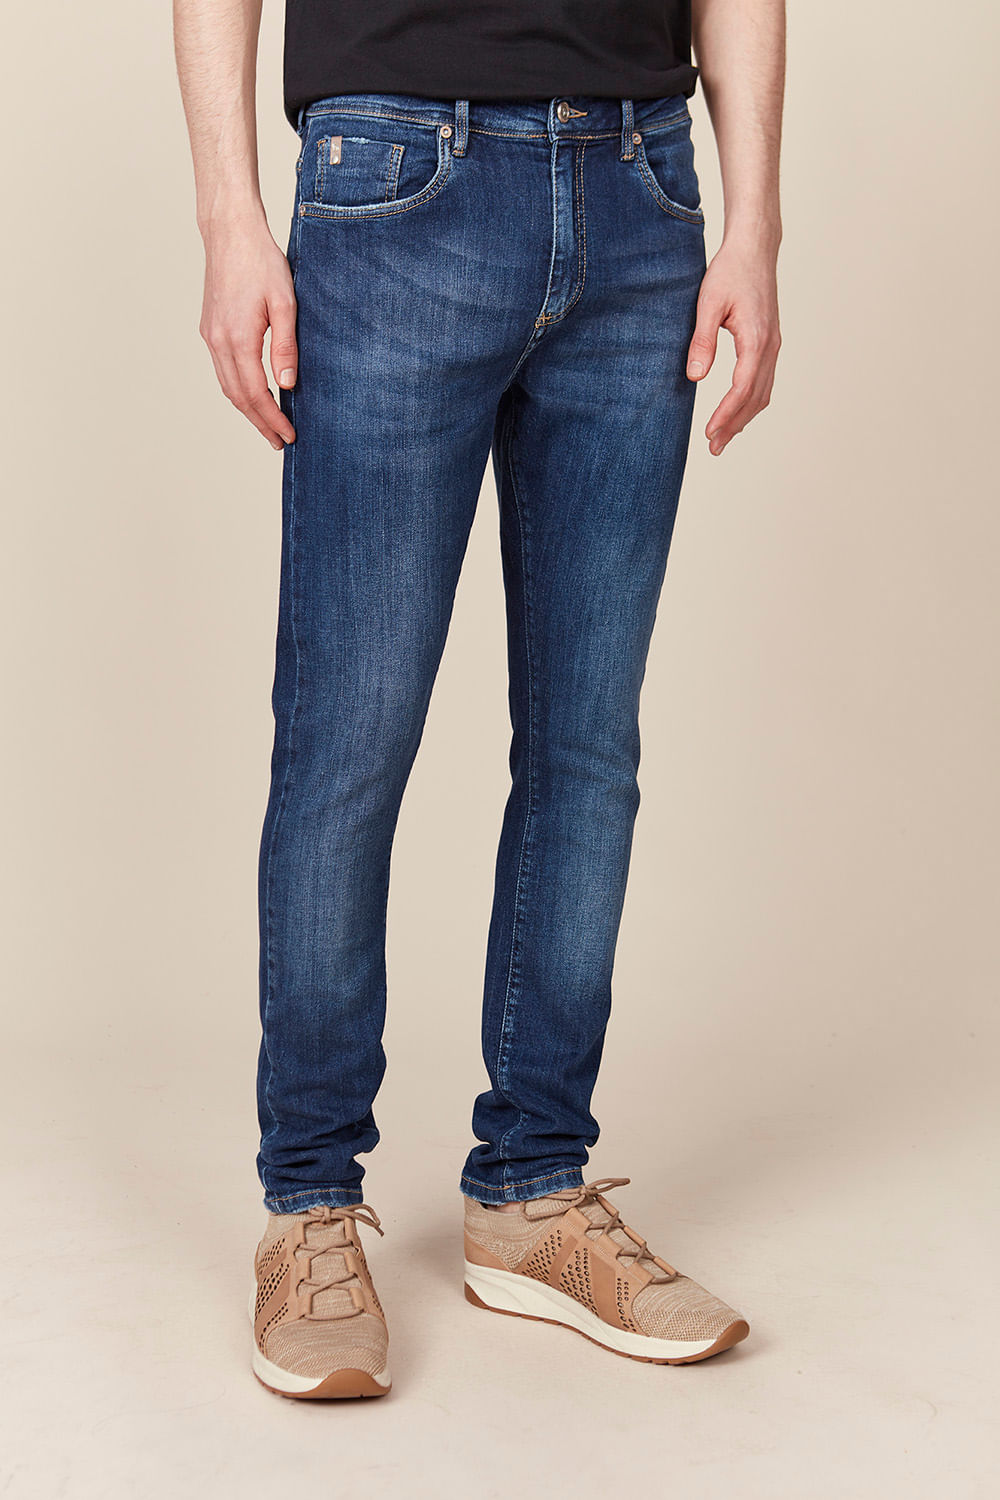 Calça Jeans Masculina Skinny Modern Wash Acostamento